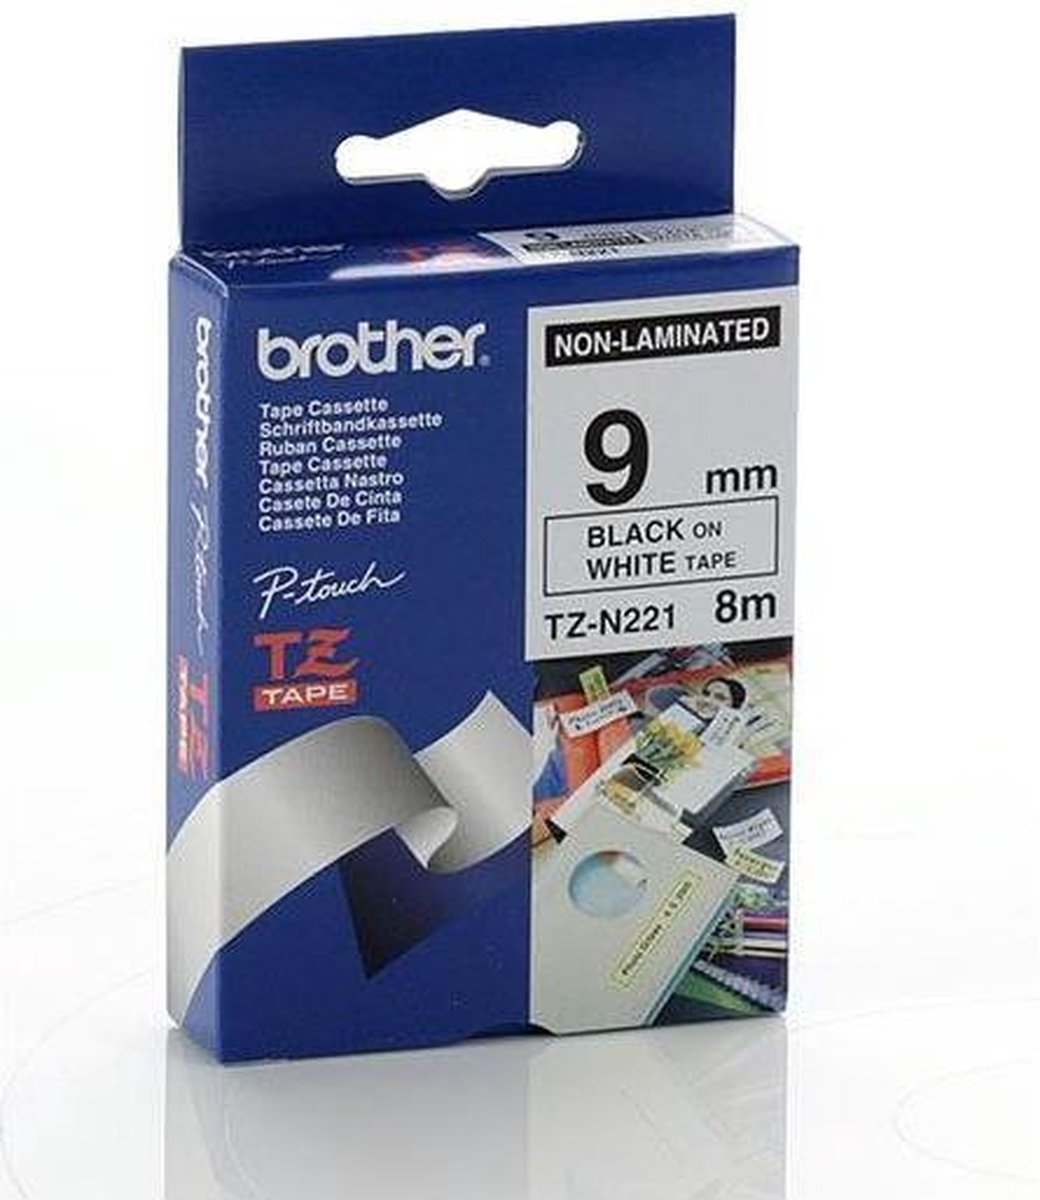 Brother Non-Laminated Labelling Tape - 9mm, Black/White TZ labelprinter-tape